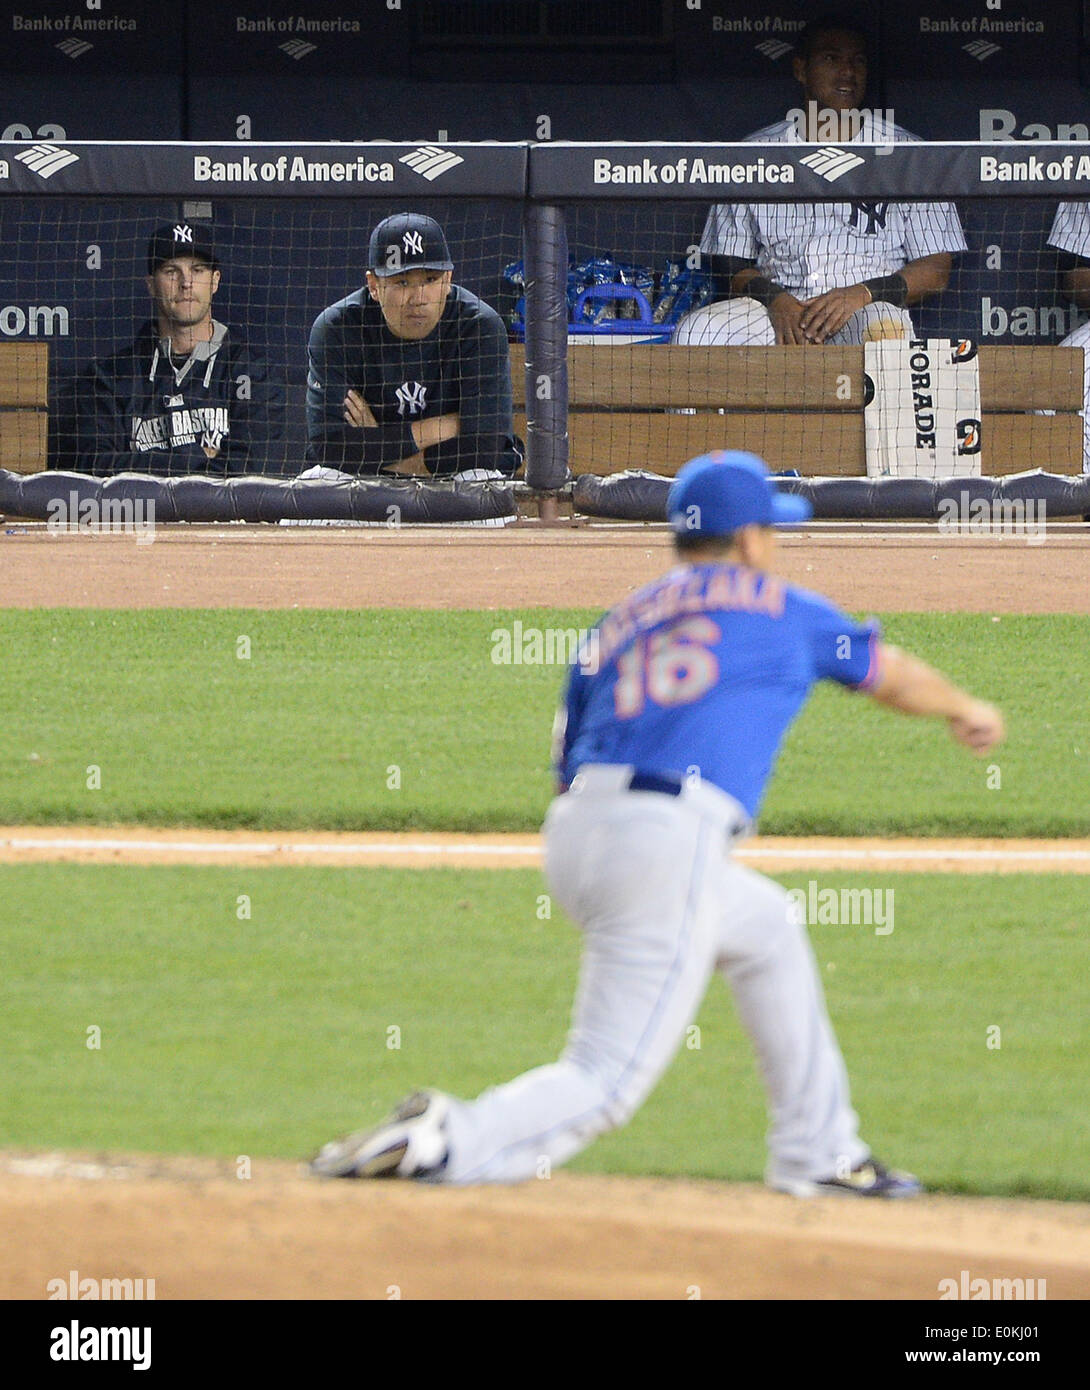 Masahiro Tanaka (Yankees), Daisuke Matsuzaka (METS), 13 maggio 2014 - MLB : Masahiro Tanaka dei New York Yankees orologi da la piroga come Daisuke Matsuzaka dei New York Mets piazzole durante il Major League Baseball gioco allo Yankee Stadium nel Bronx, New York, Stati Uniti. (Foto di AFLO) Foto Stock